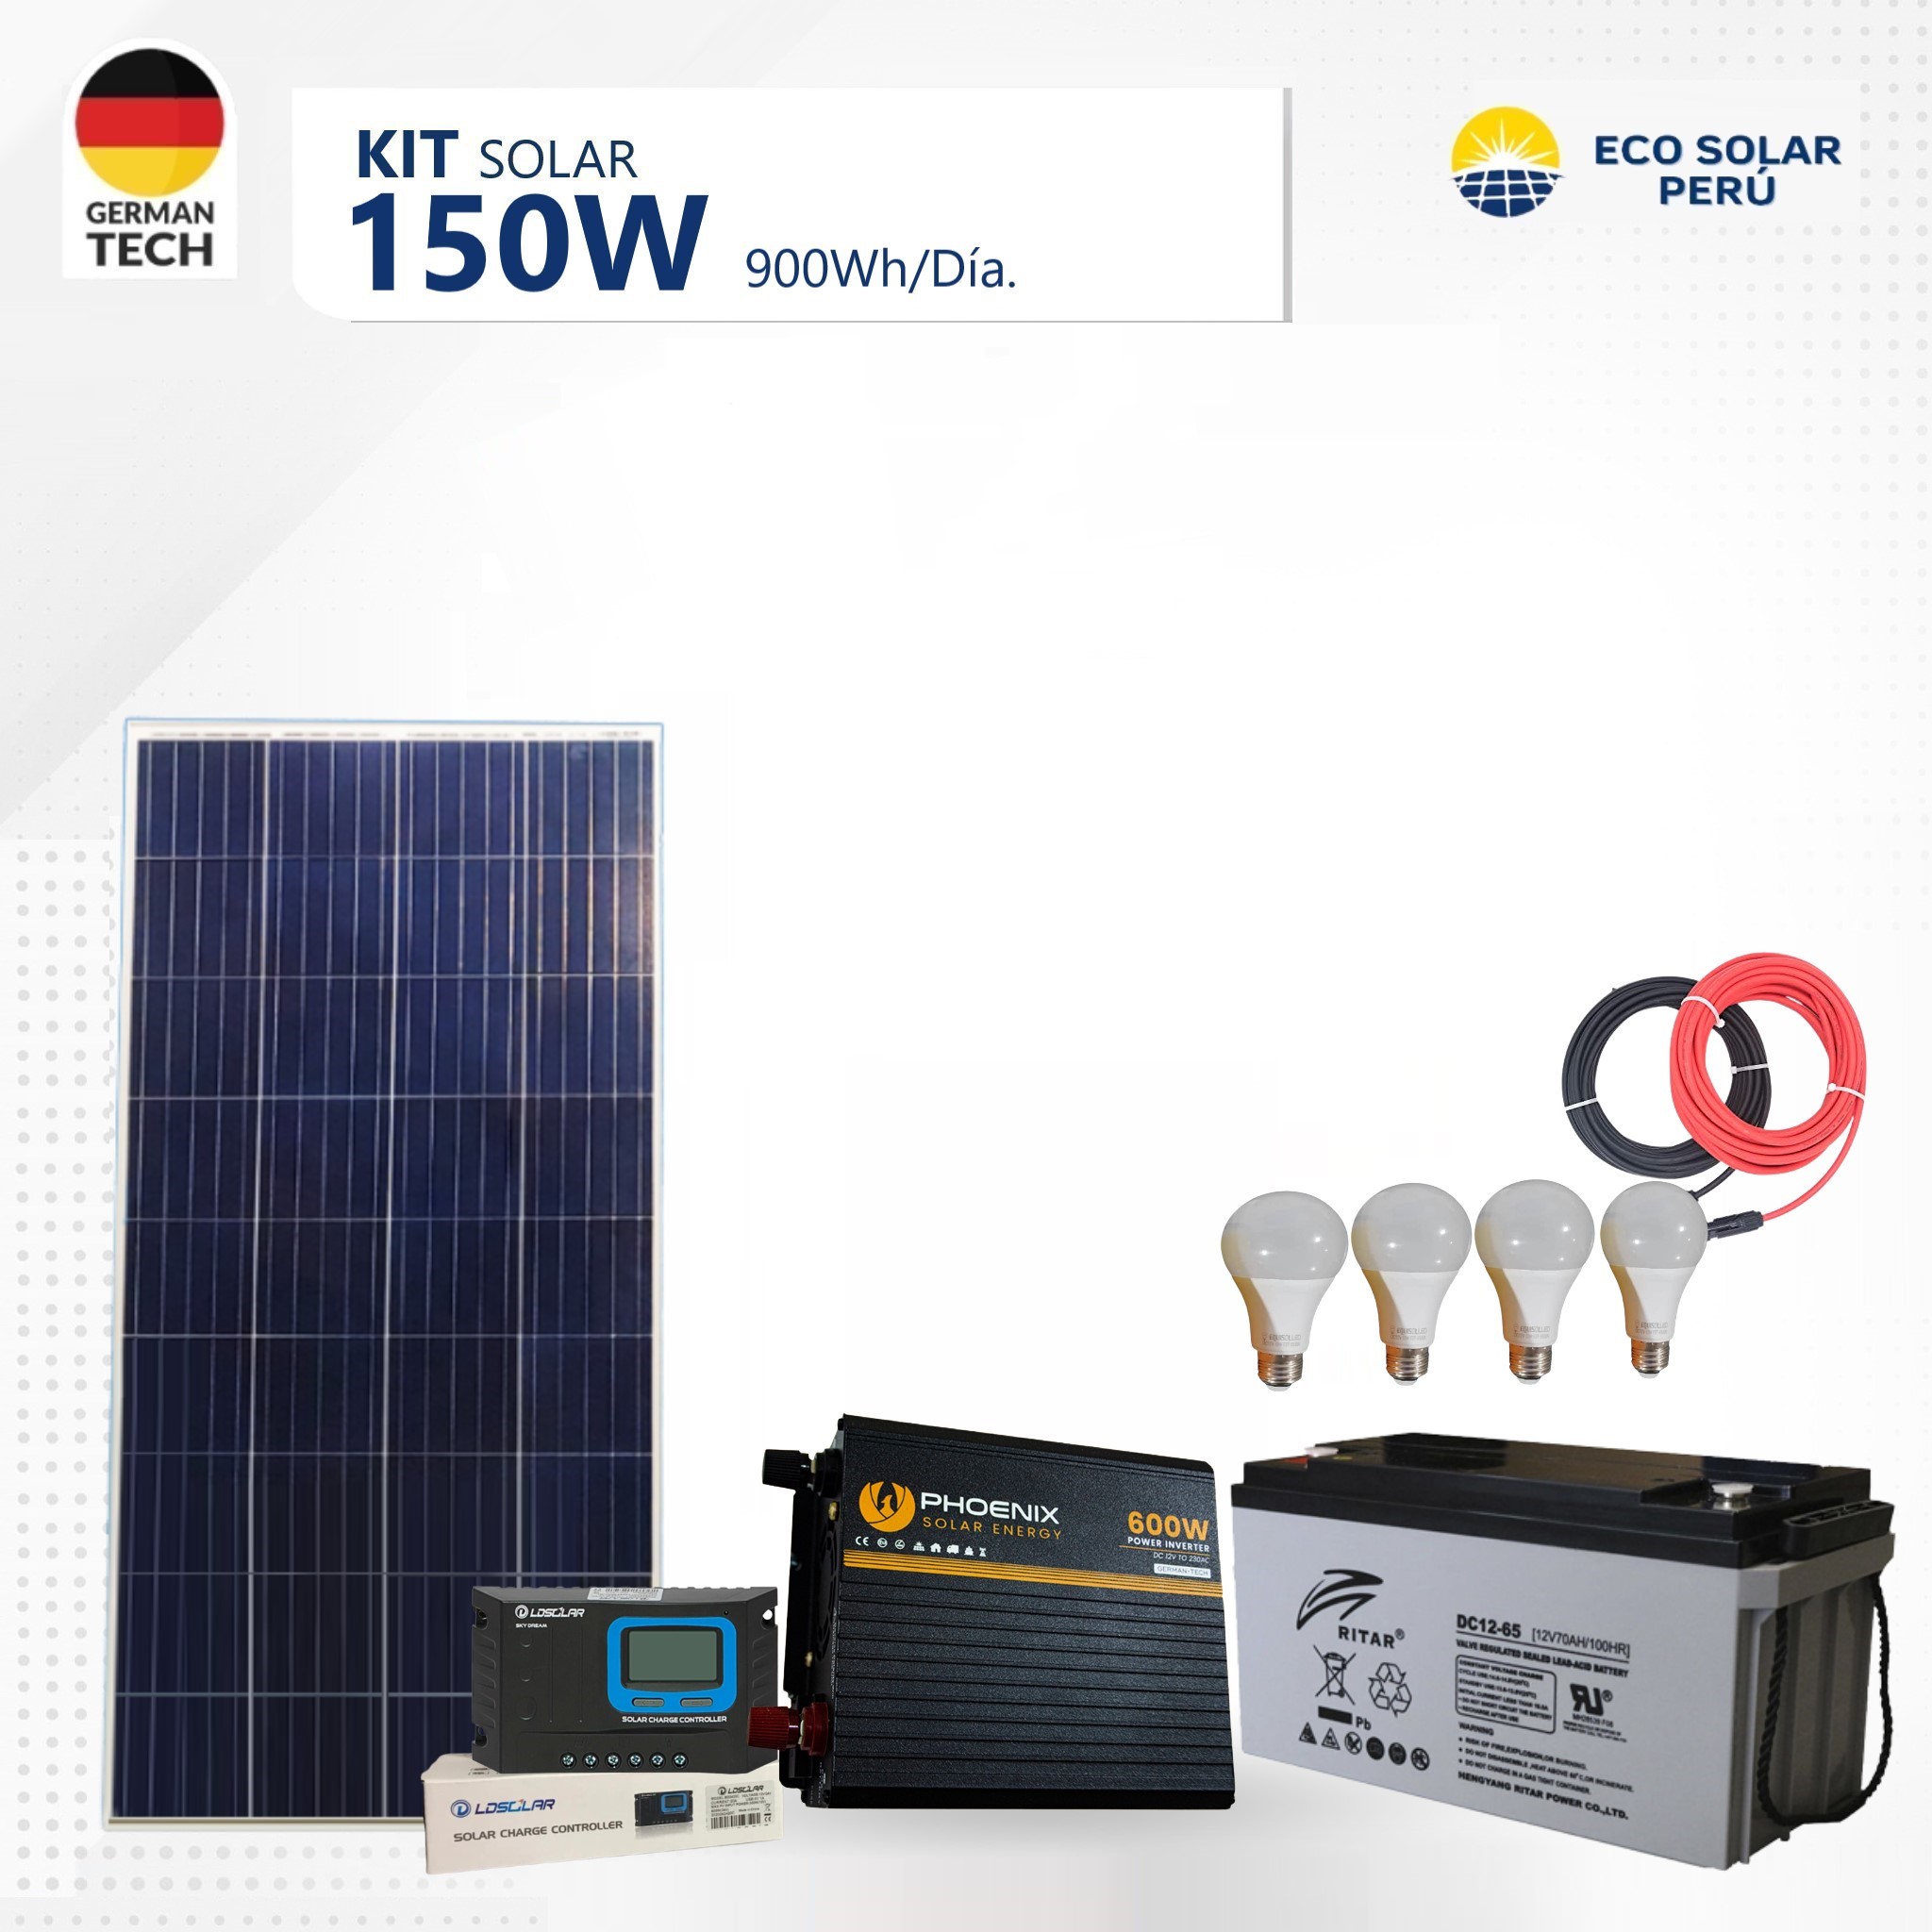 Bateria Solar Gel 12v 200Ah ALTA TEMPERATURA CSBattery - Panel Solar Peru